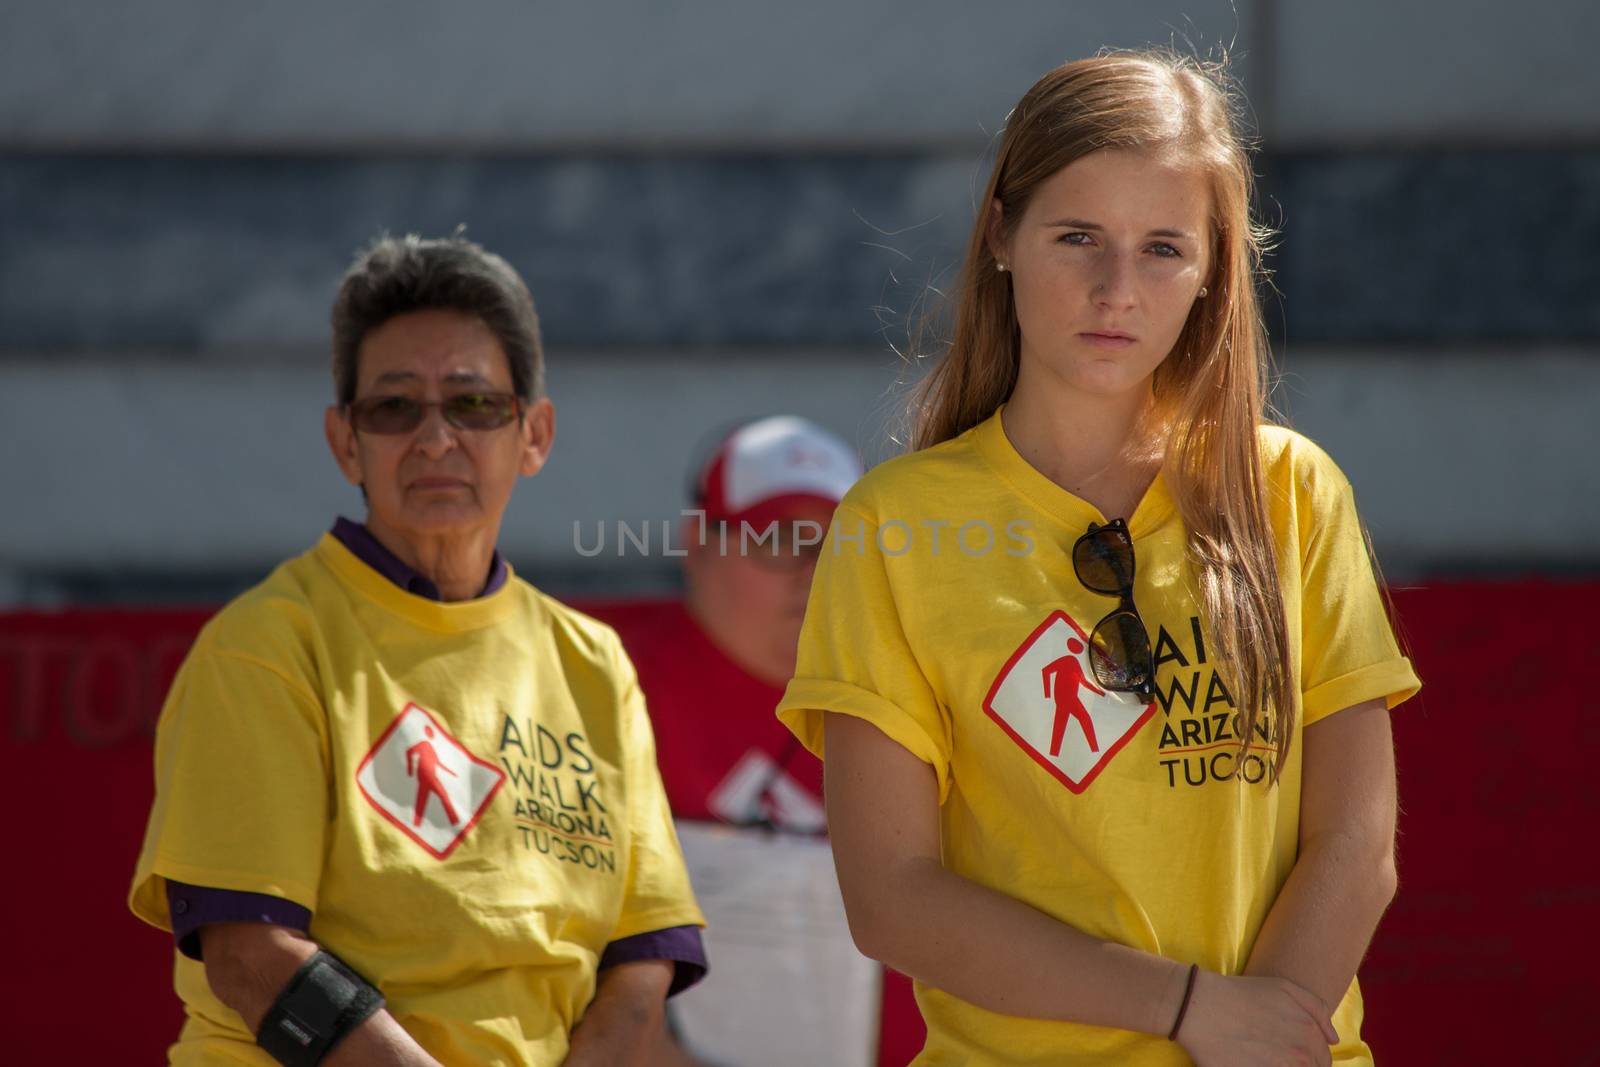 TUCSON, AZ/USA - OCTOBER 12:  Unidentified young woman at AIDSwalk on October 12, 2014 in Tucson, Arizona, USA.